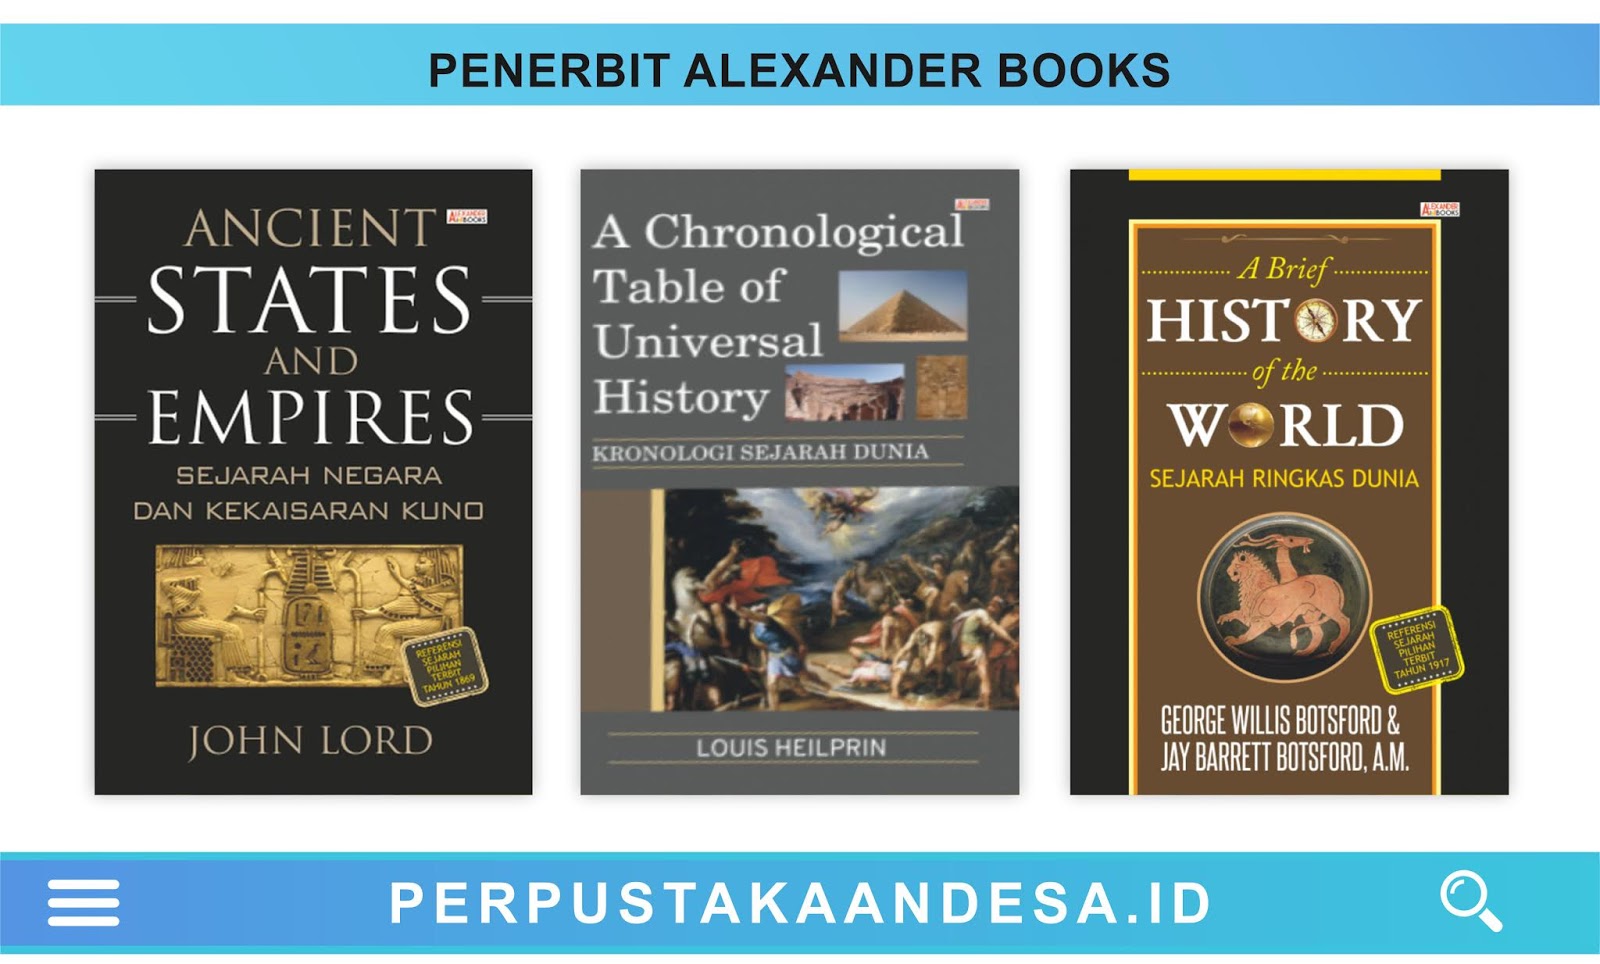 Daftar Judul Buku Buku Penerbit Alexander Books Perpustakaan Desa